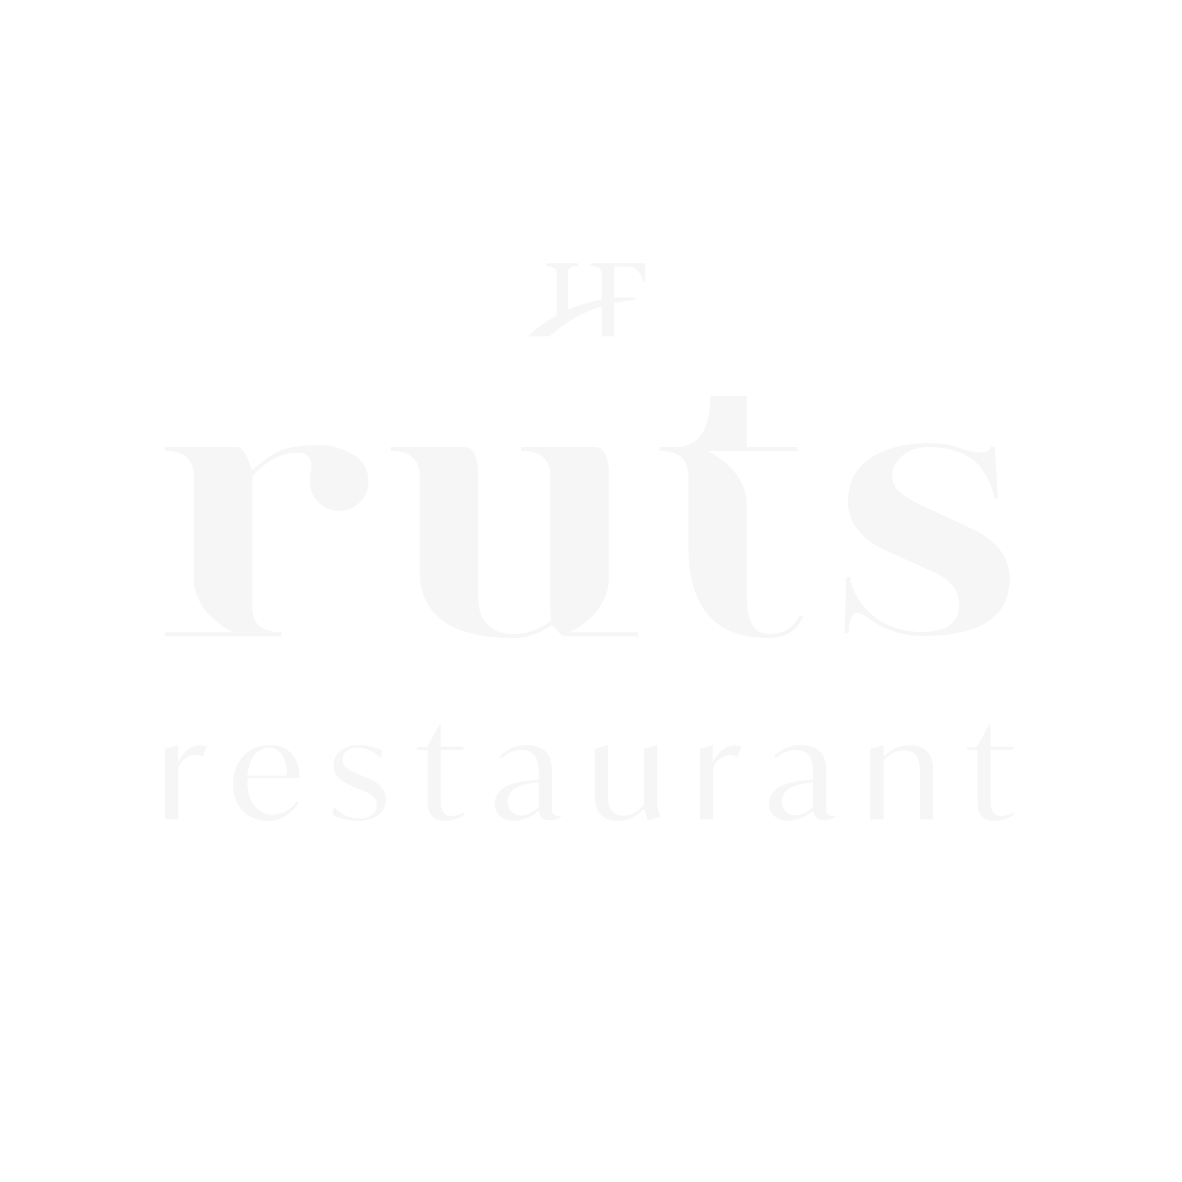 Ruts logo